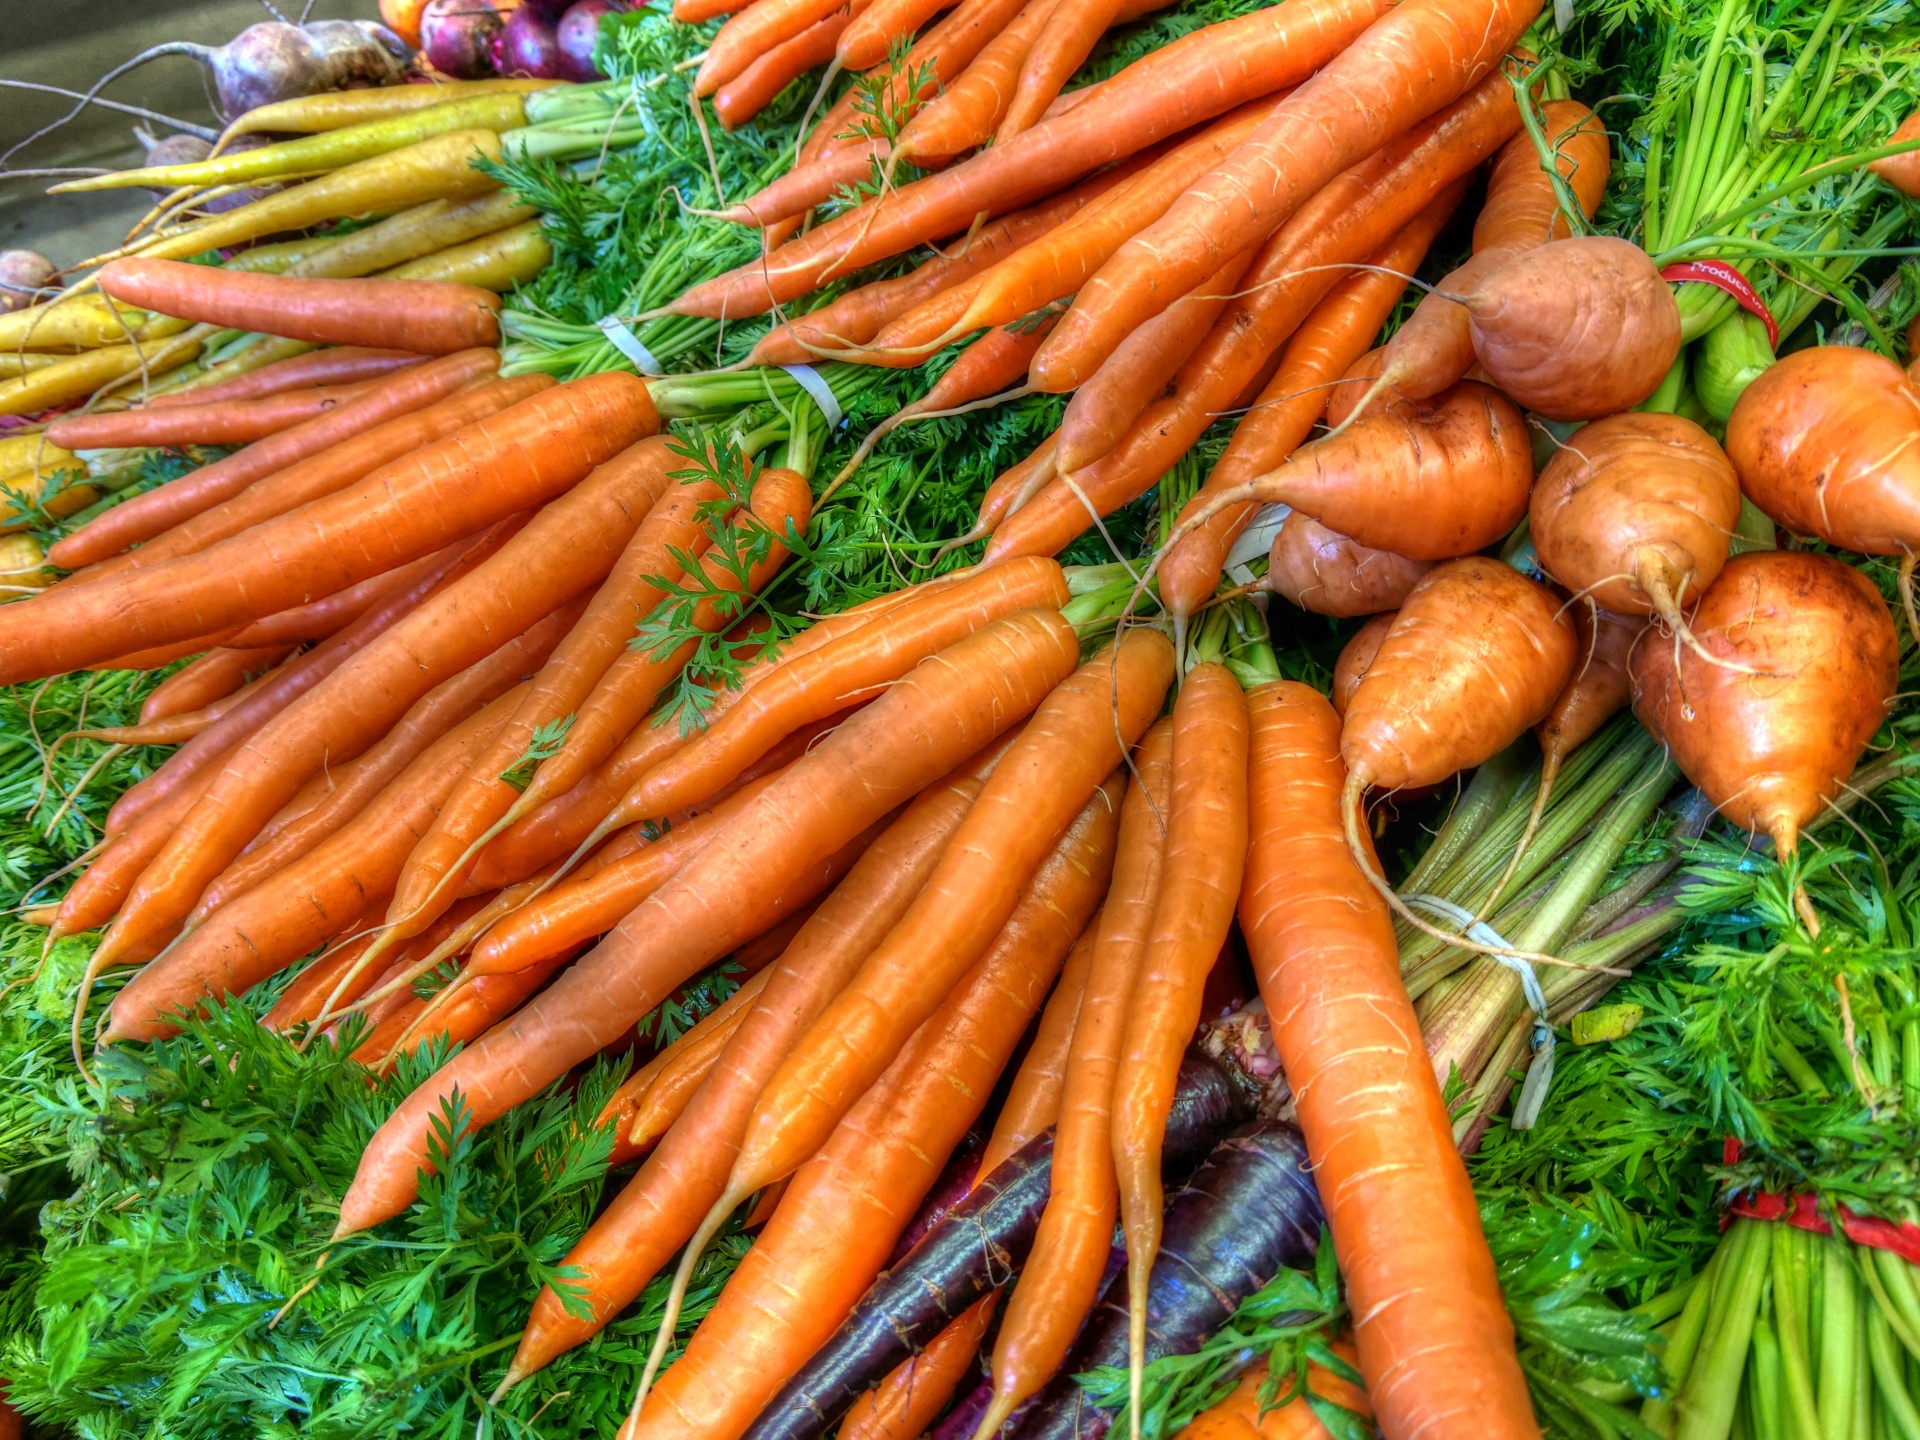 Download free photo of Carrot,mga karot,vegetable,vegan,health - from needpix.com